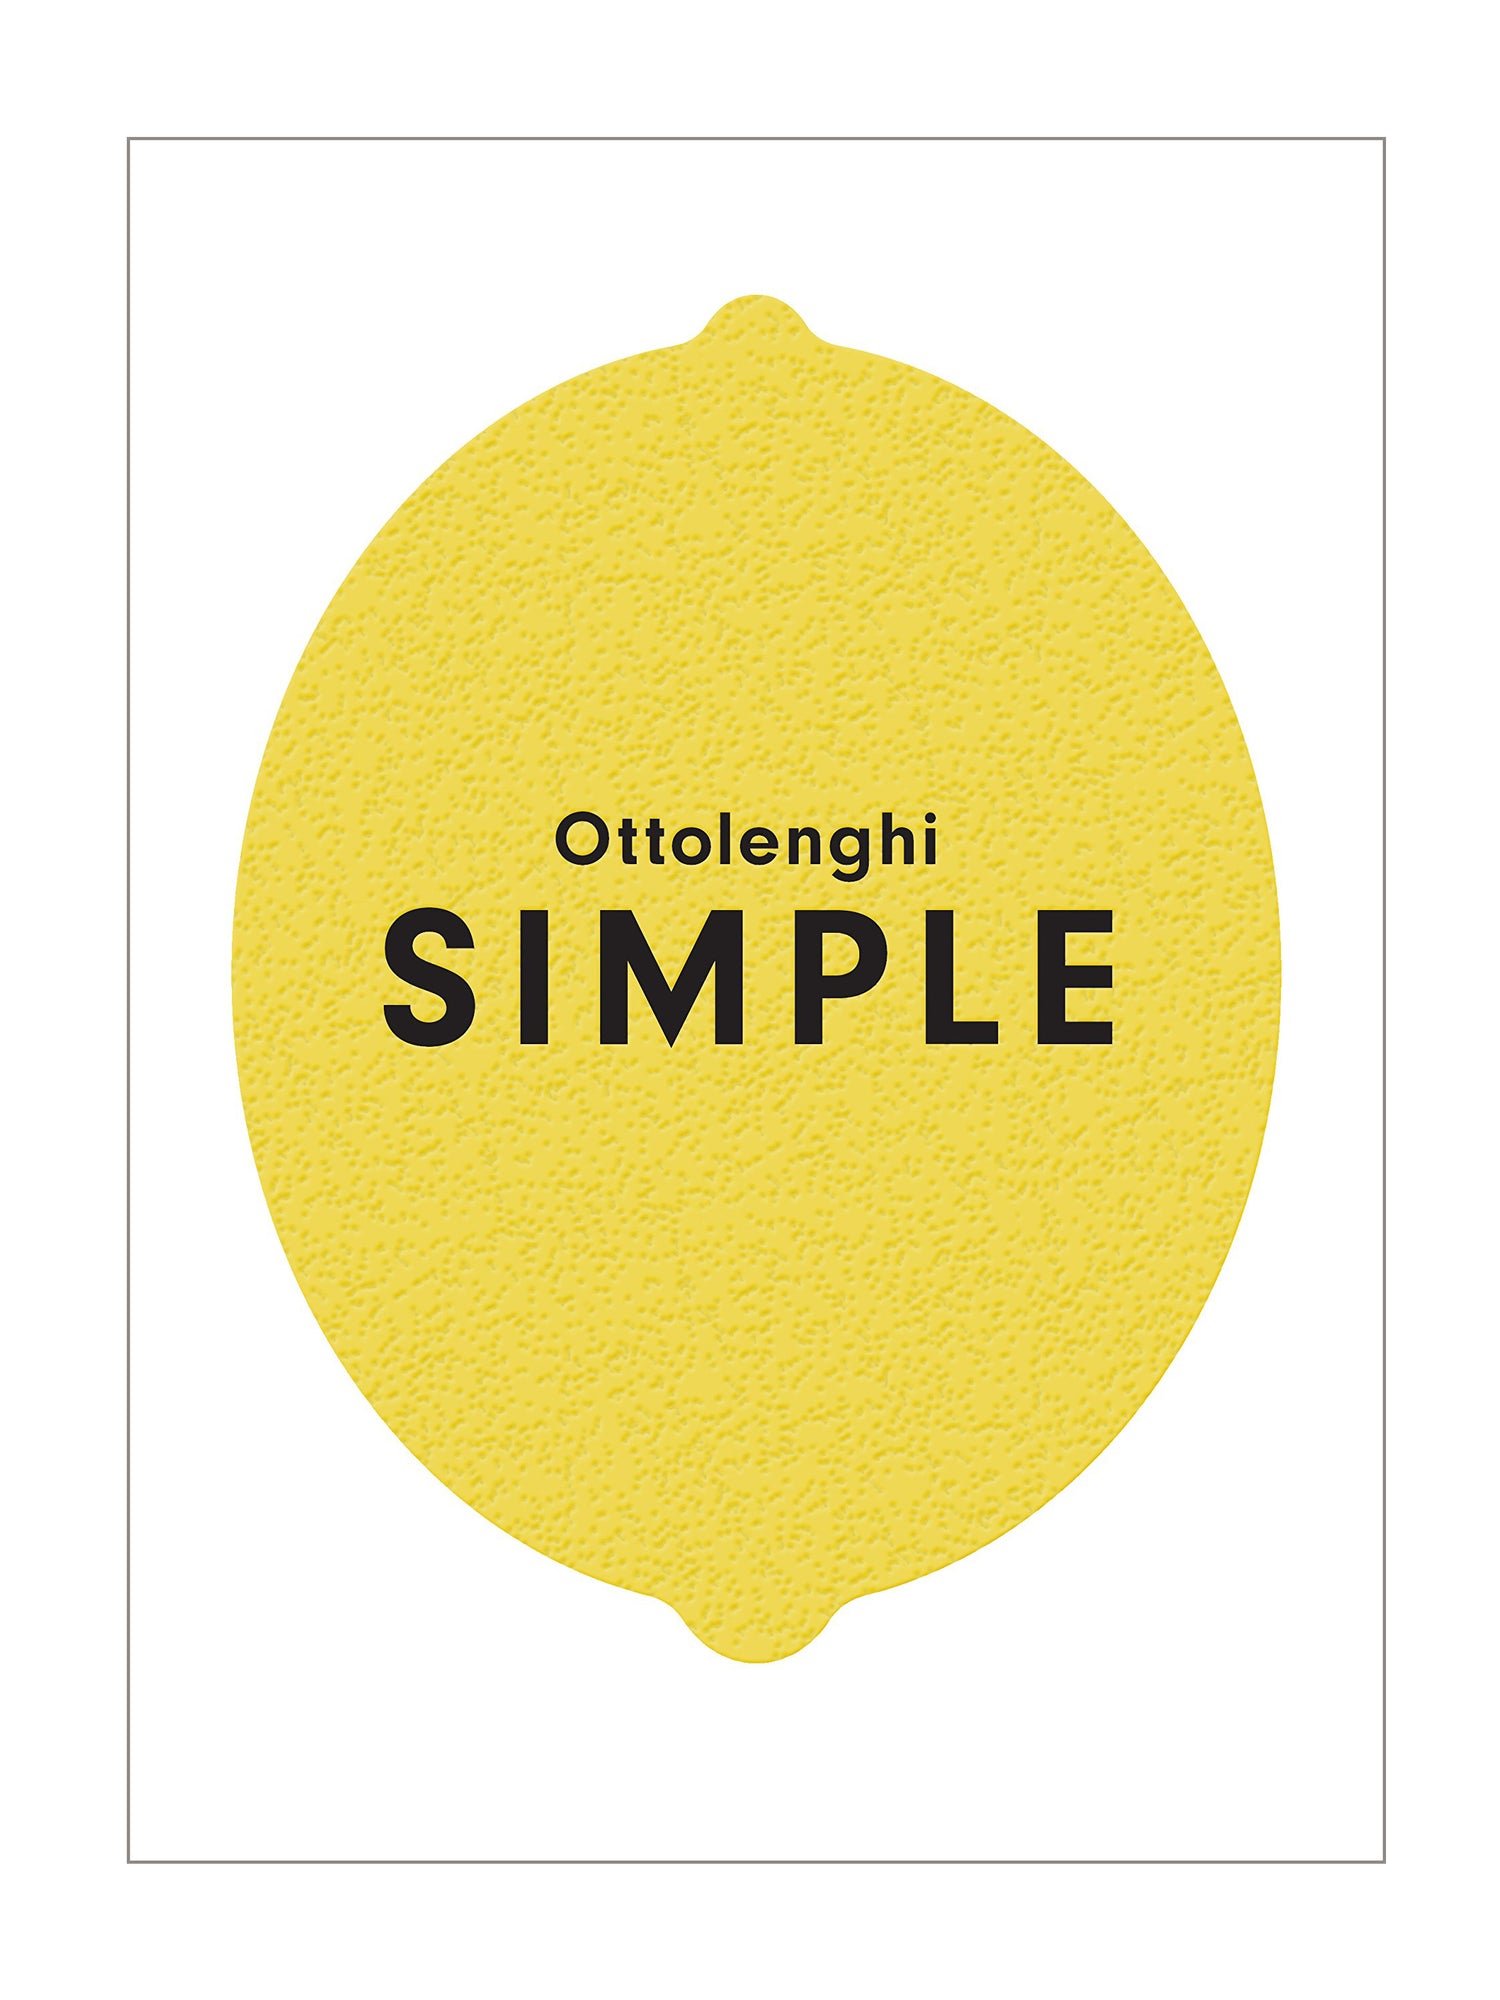 Ottolenghi Simple, cookbook